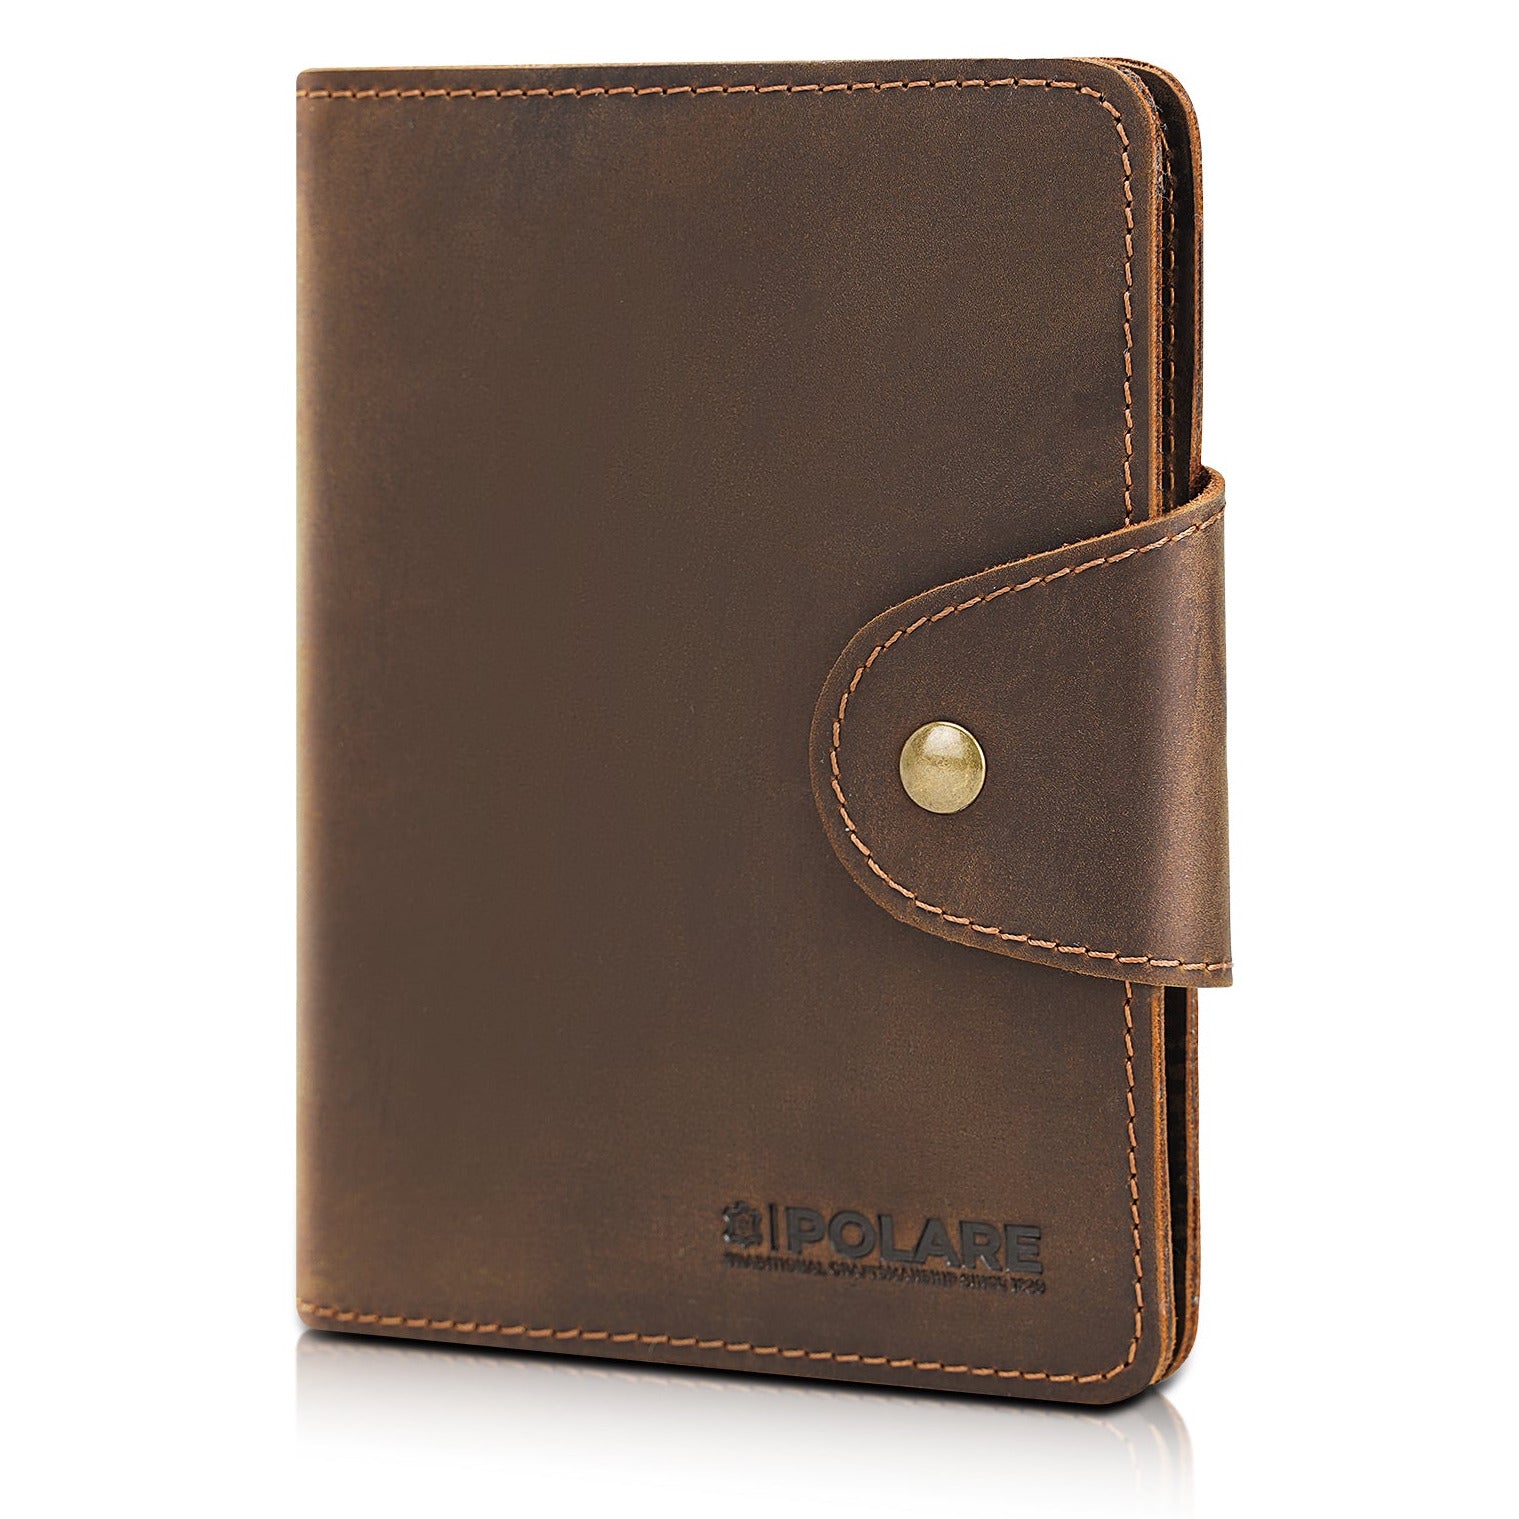 Polare Full Grain Leather Slim and Soft RFID Blocking Passport Wallet (Dark Brown)